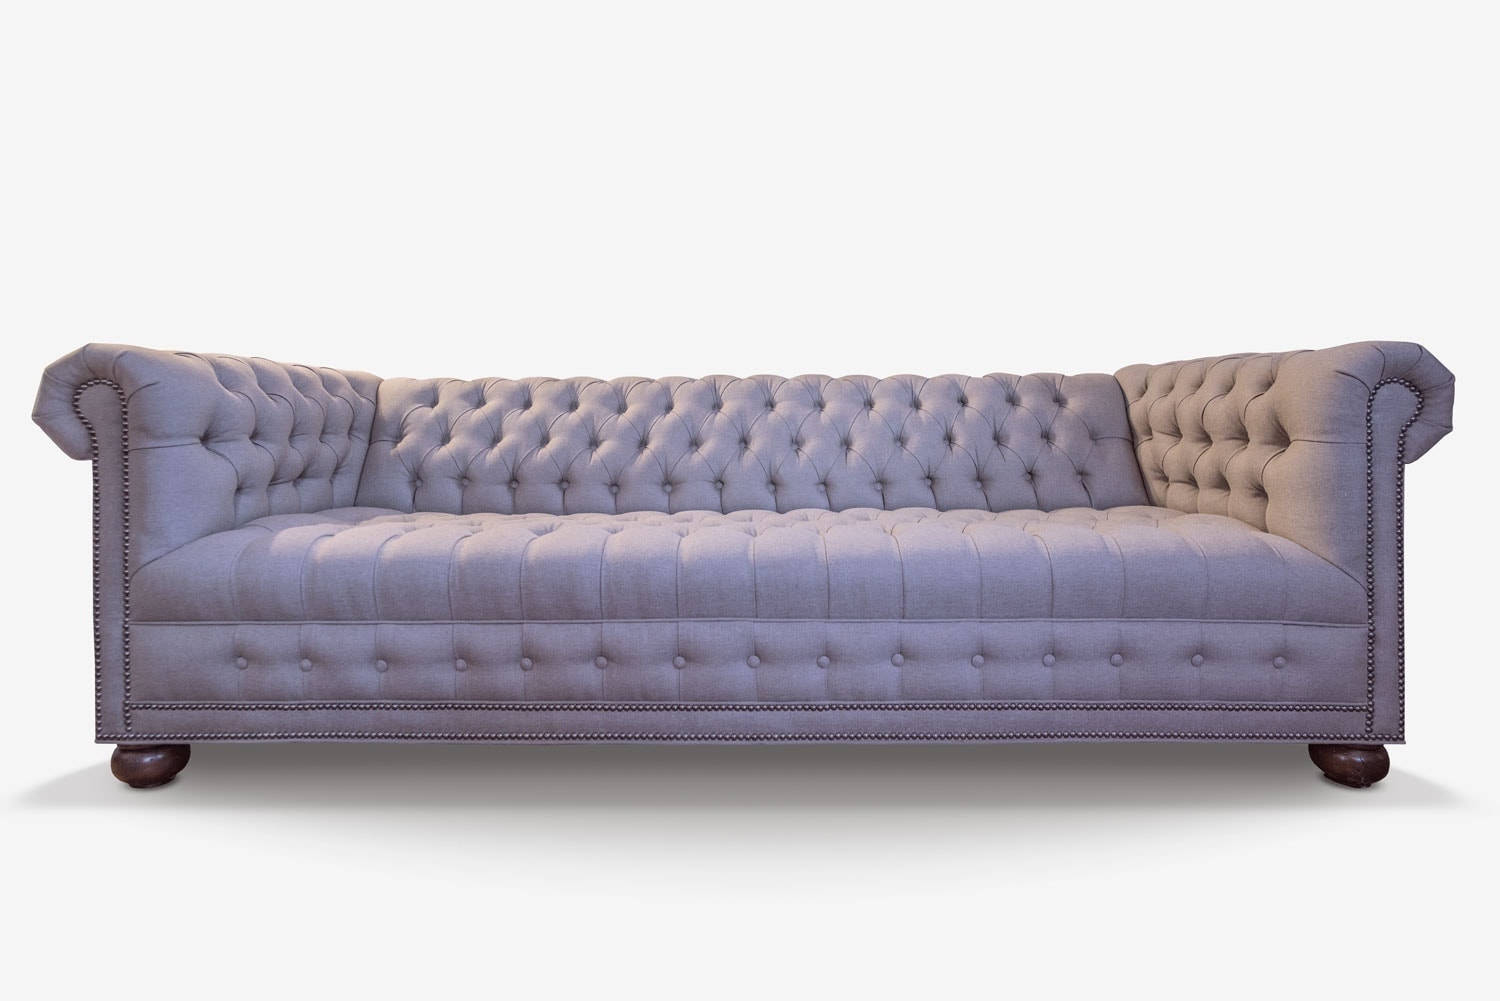 Gray Linen Hepburn Chesterfield Tufted Seat Sofa